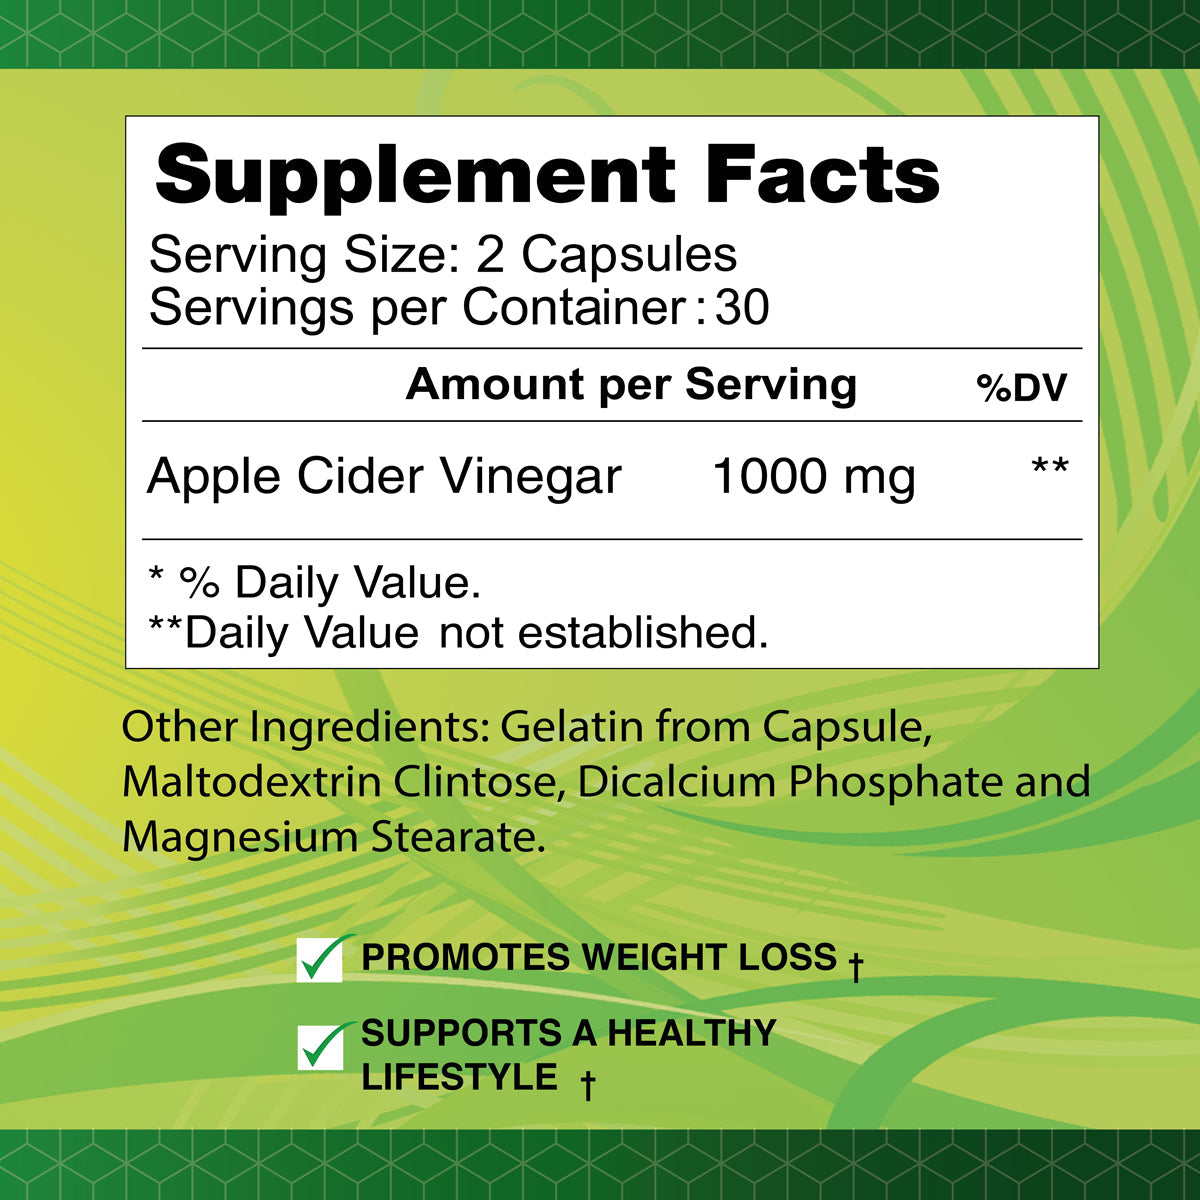 Apple Cider Vinegar 1000 mg 60 capsules - Master Case 48